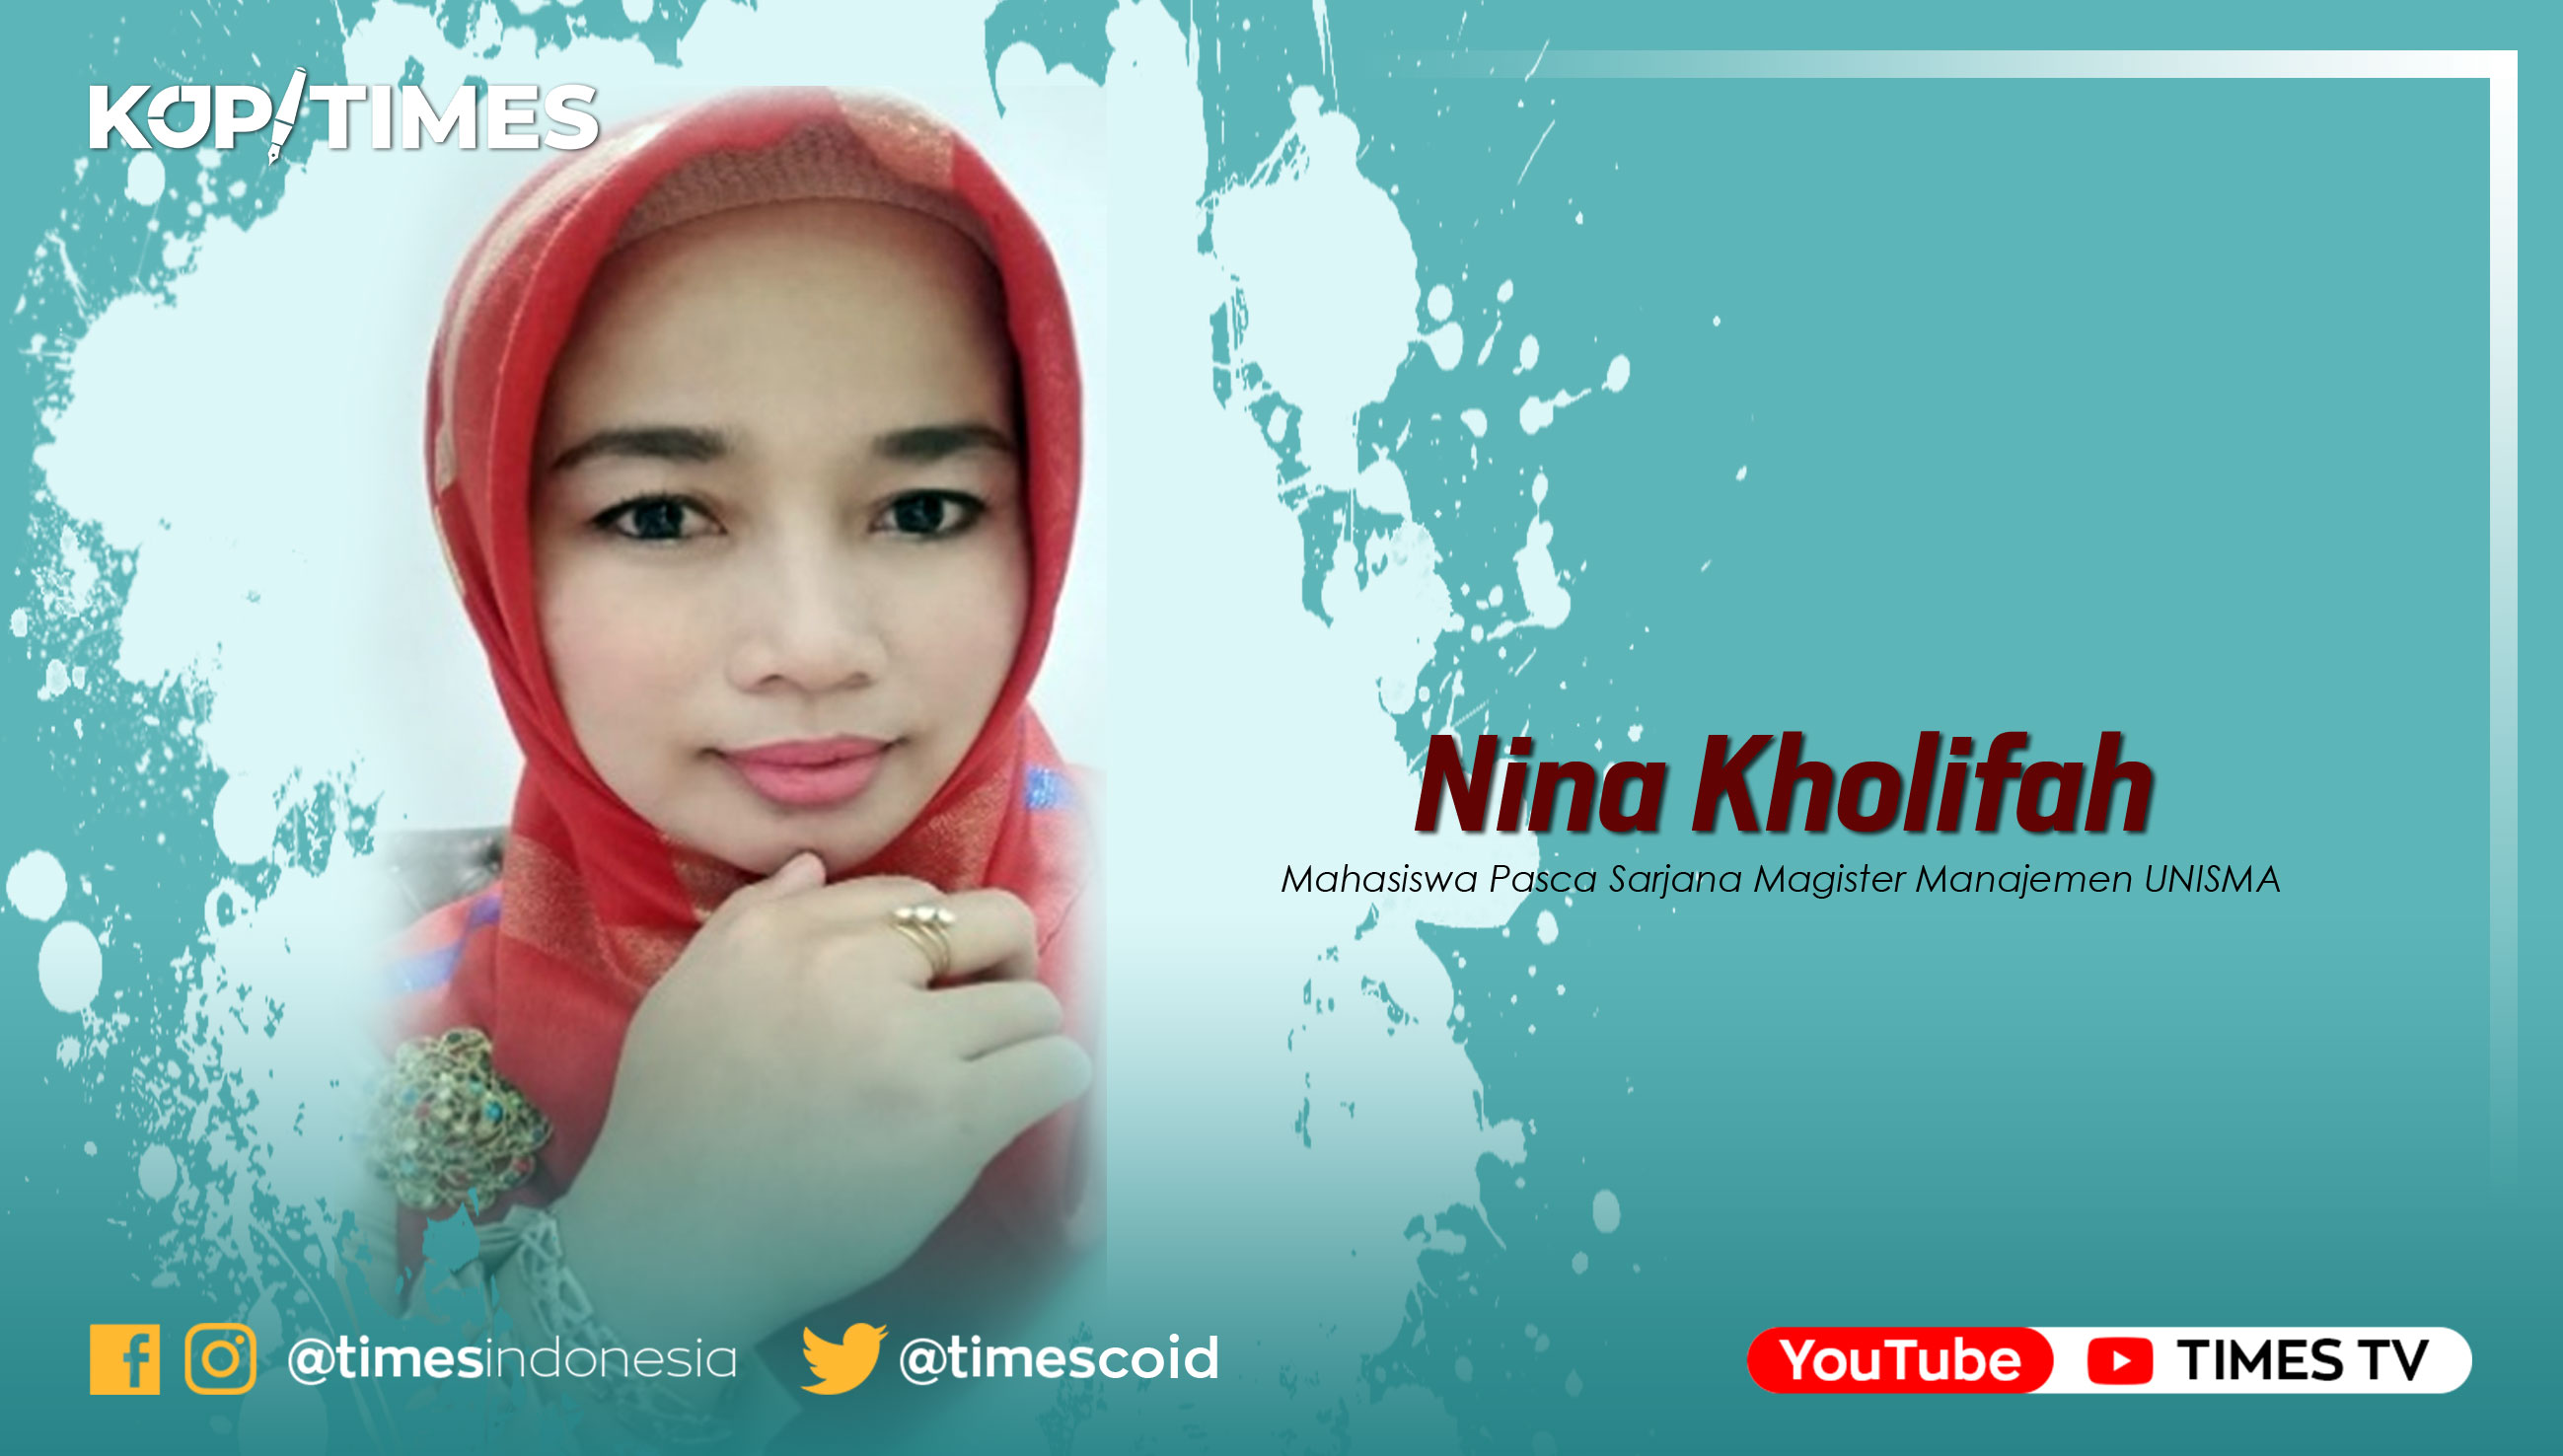 Nina Kholifah, Mahasiswa Pasca Sarjana Magister Manajemen UNISMA.